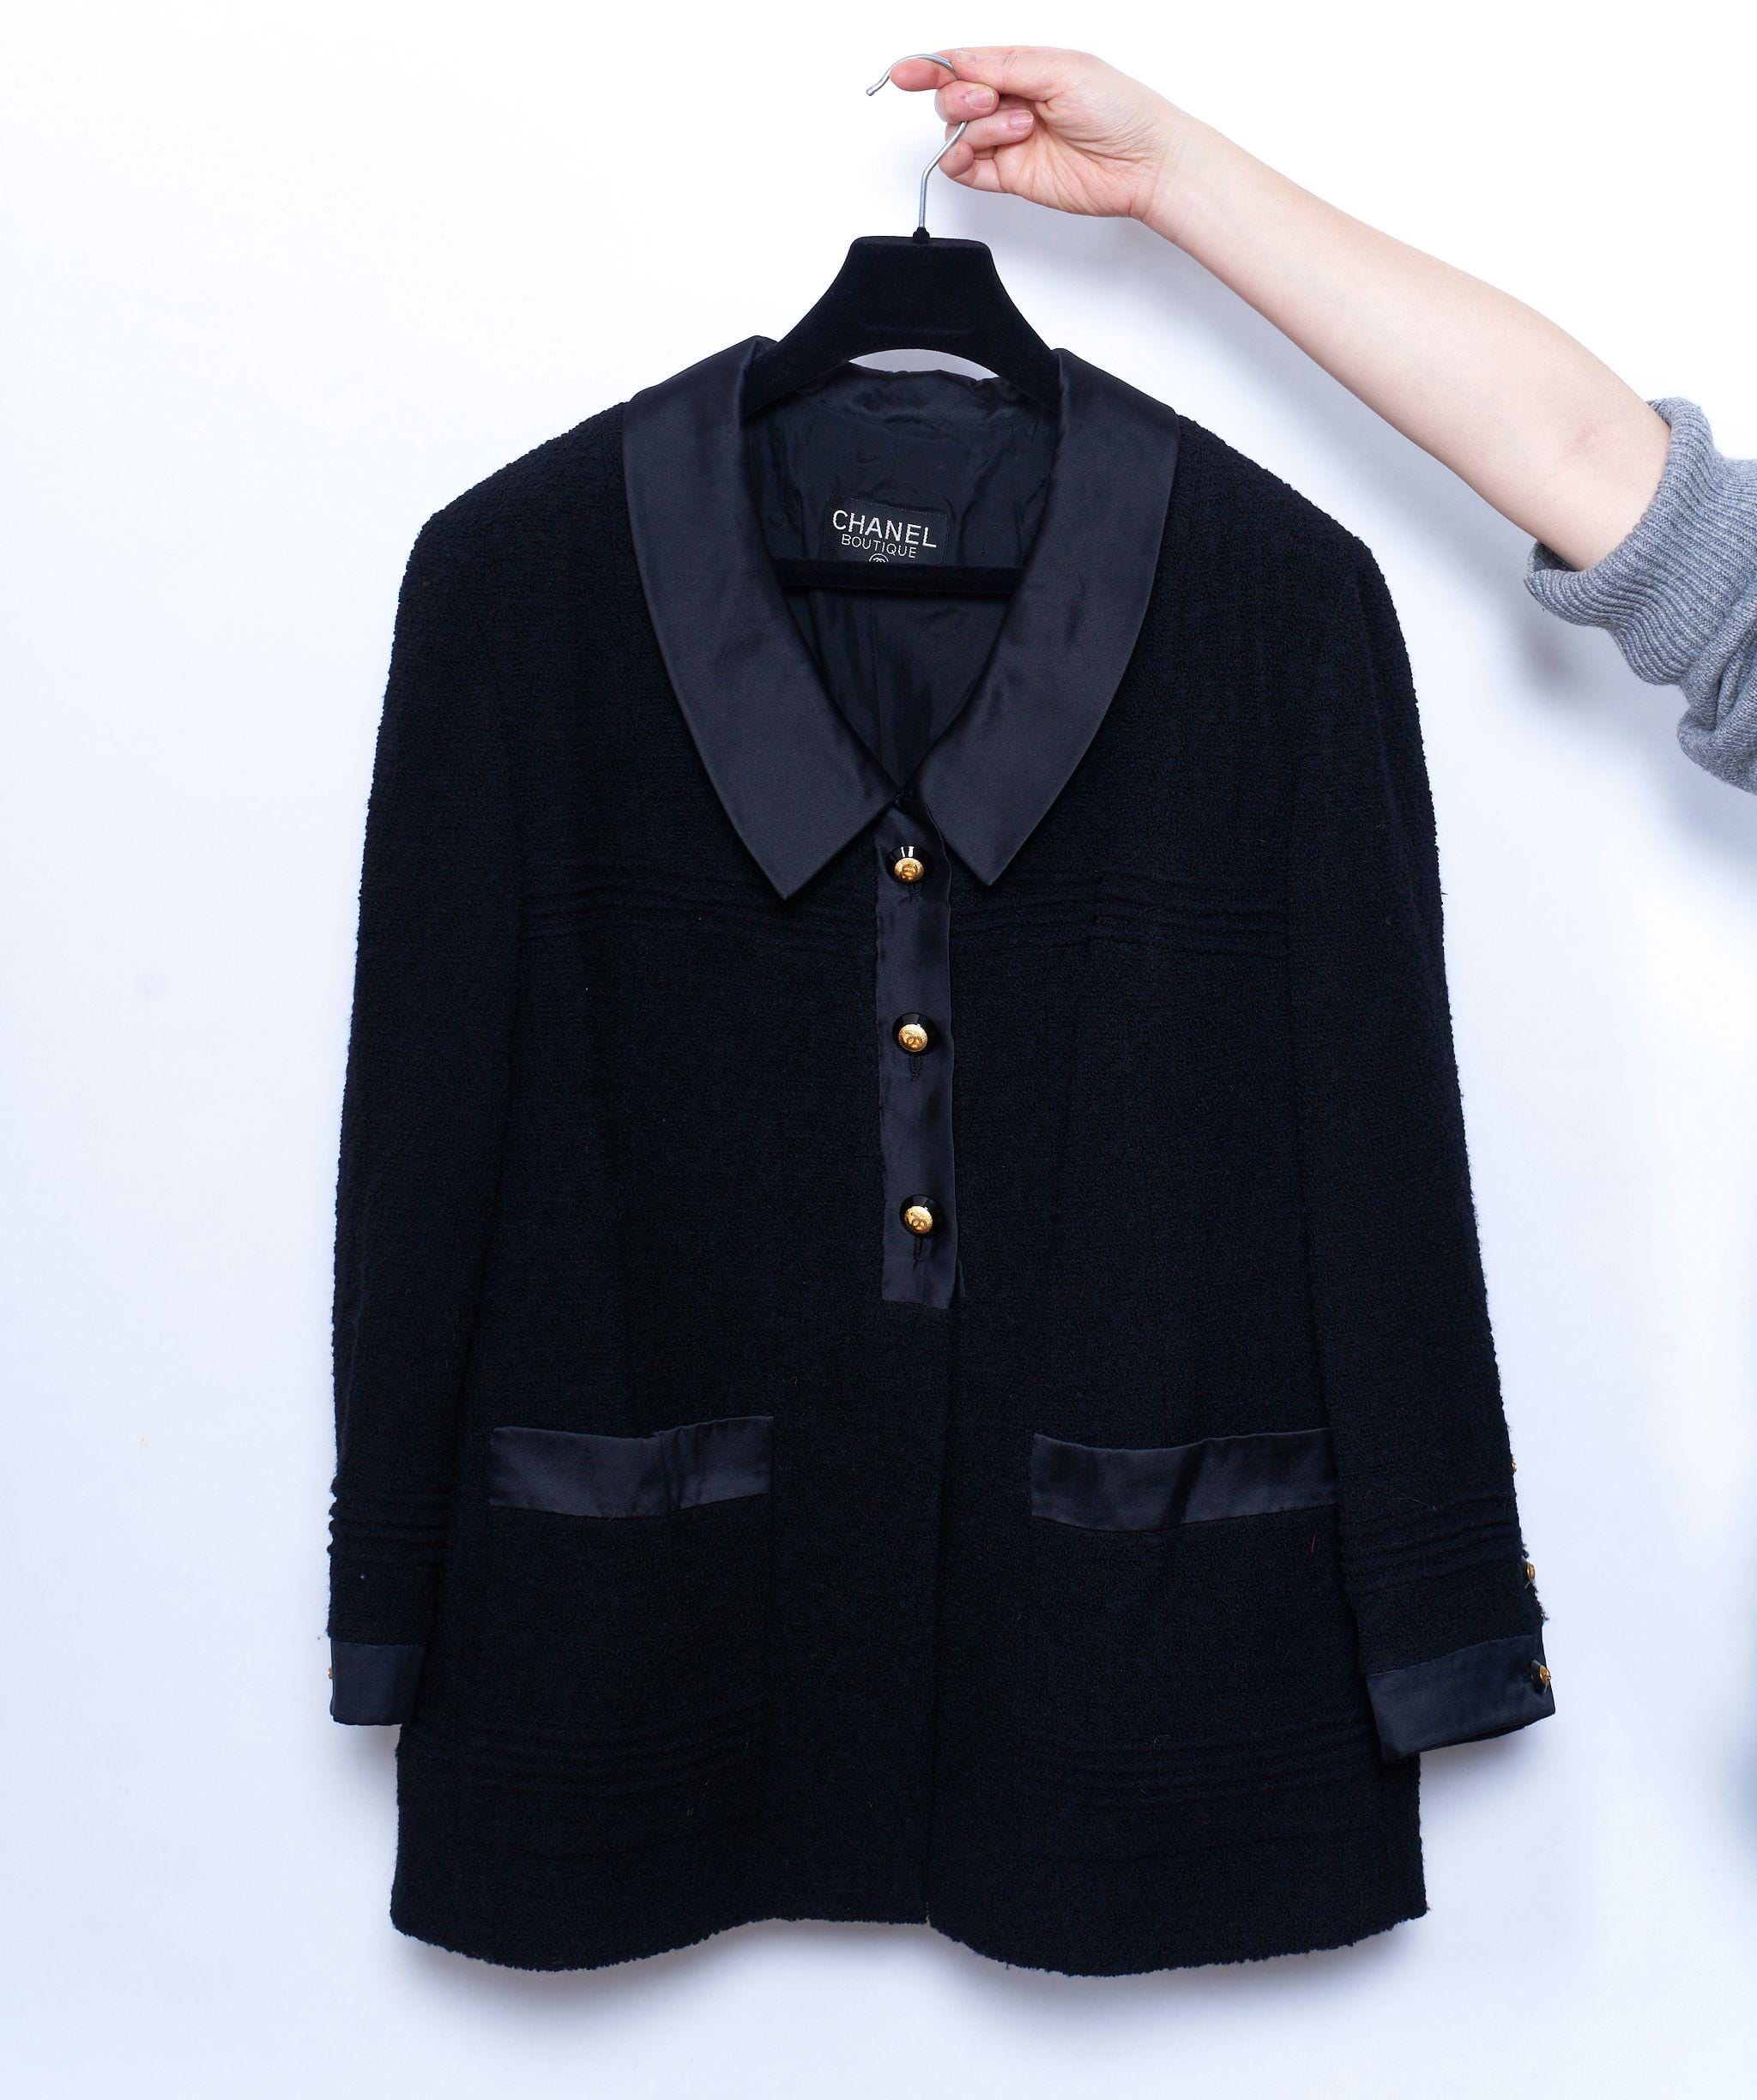 Chanel Chabek black tweed jacket